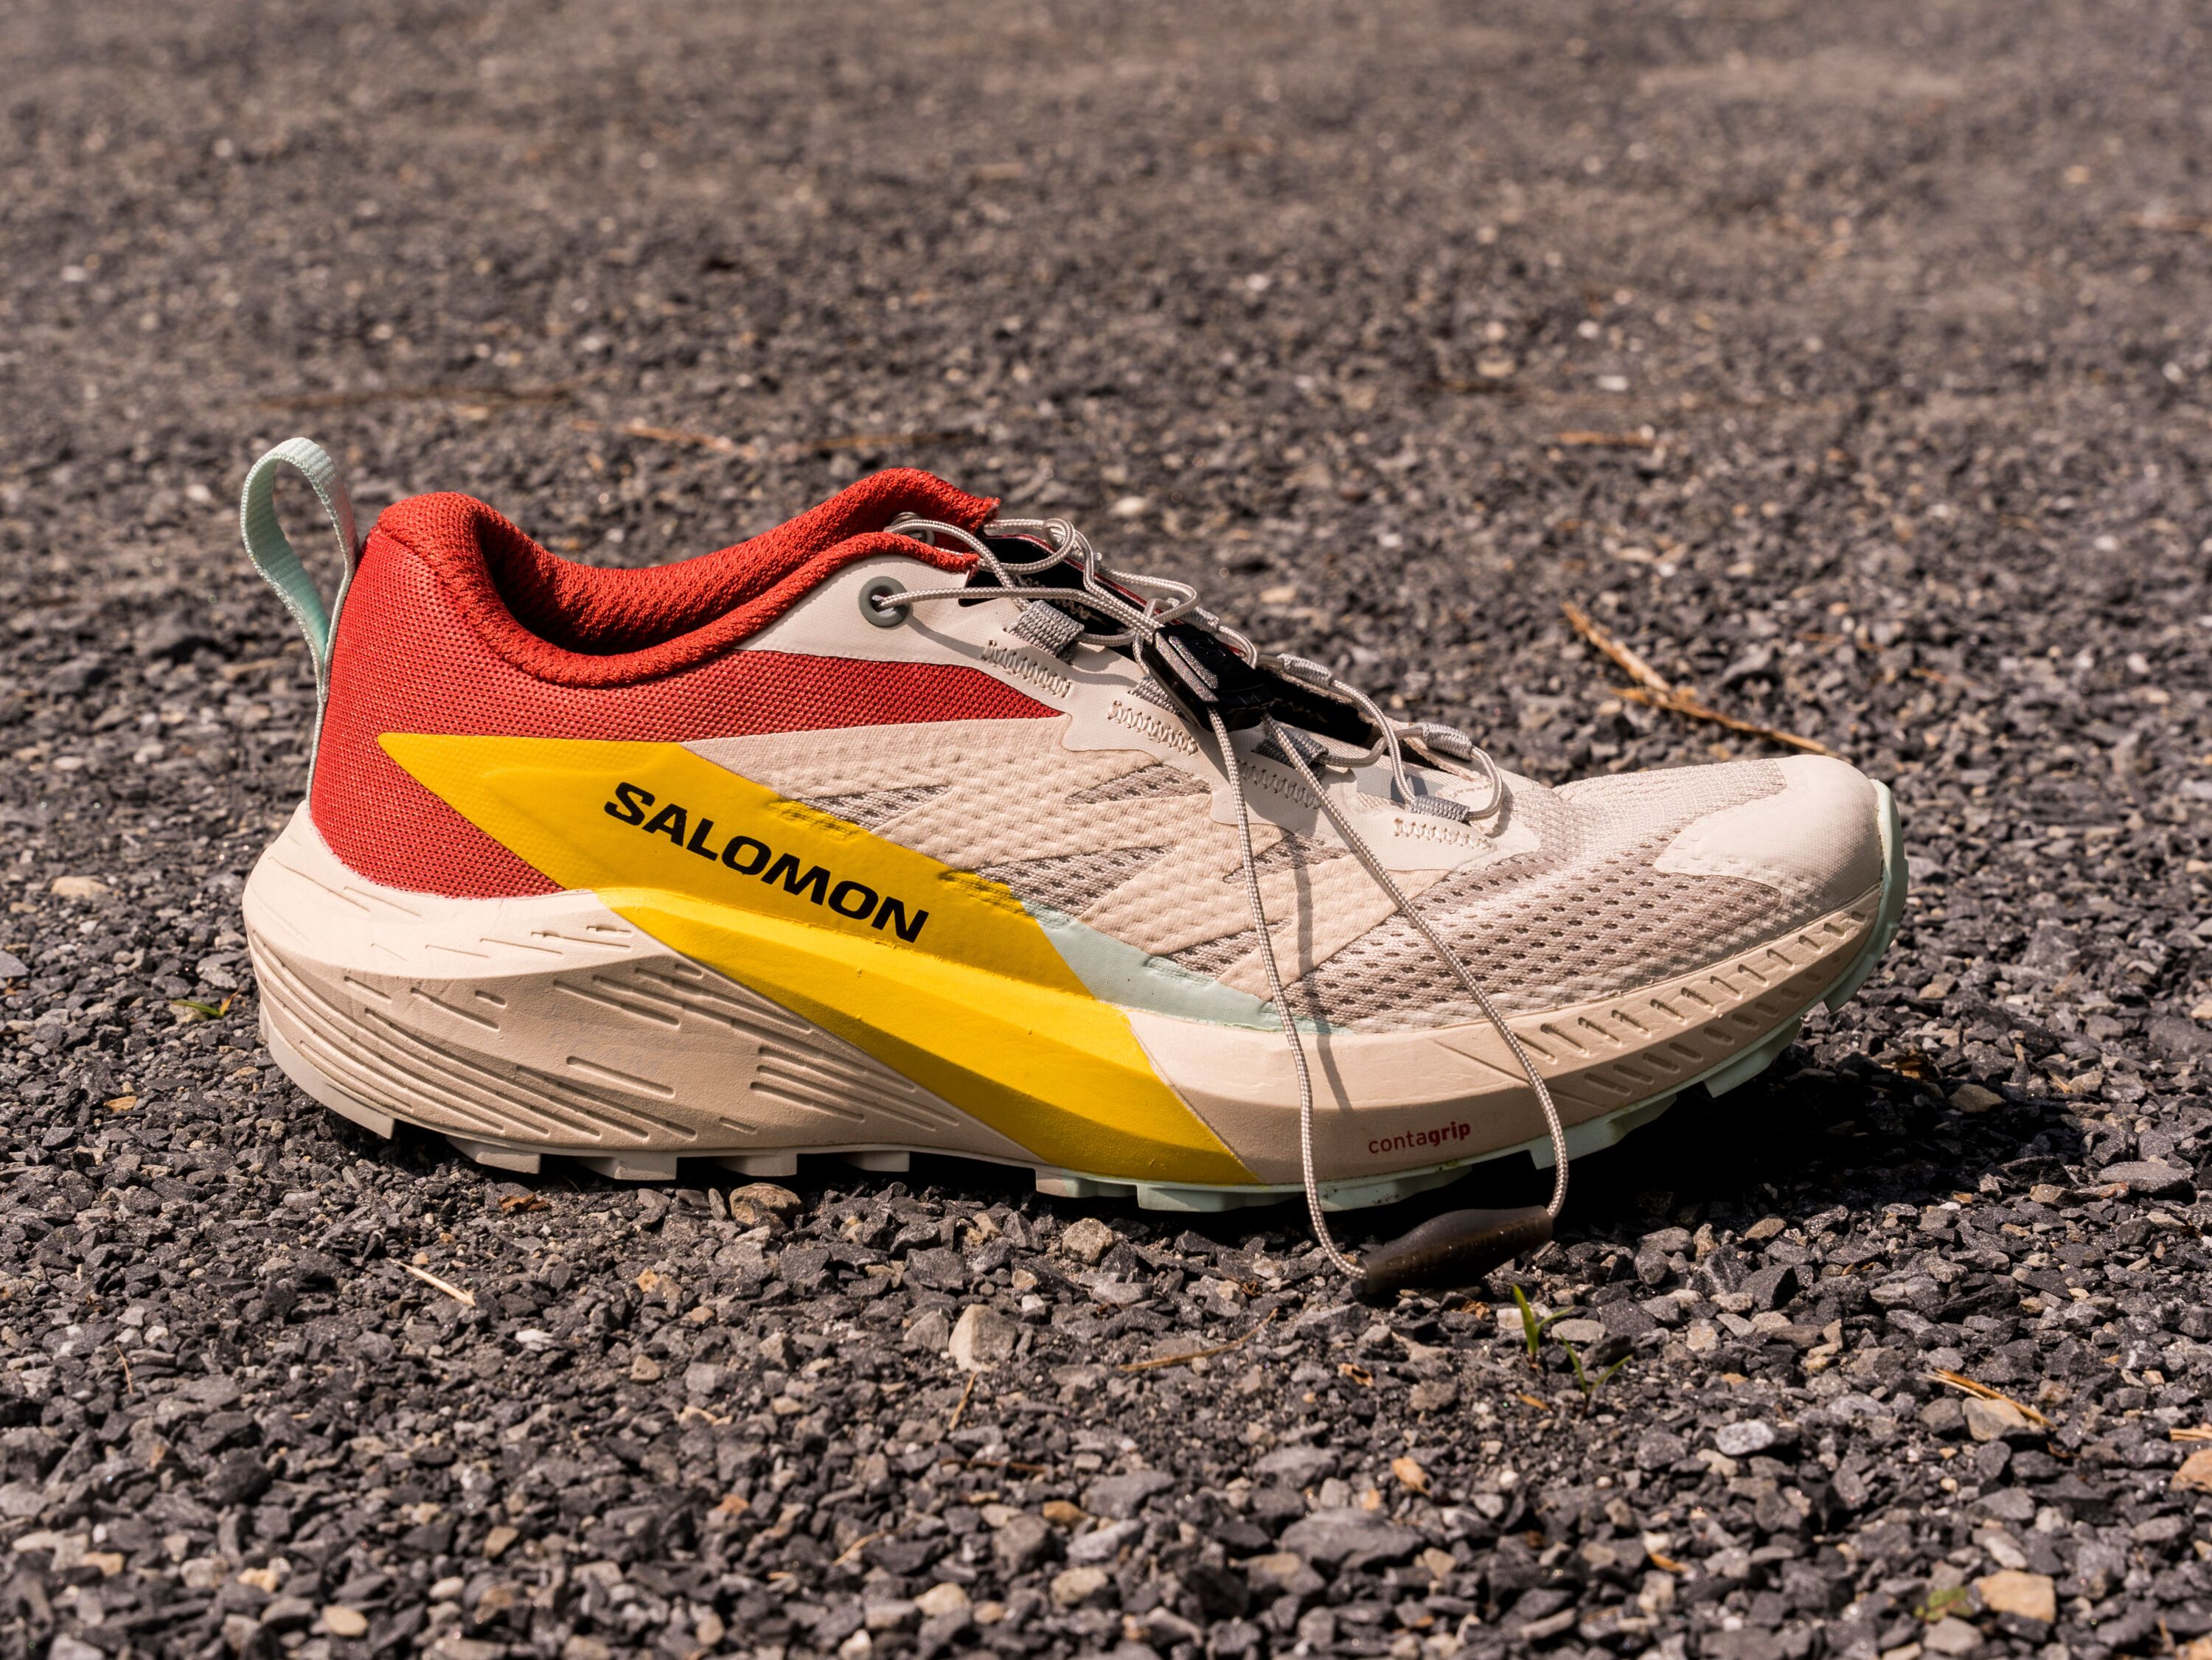 Salomon Sense Ride 5 Trail Running Shoe Review - FueledByLOLZ